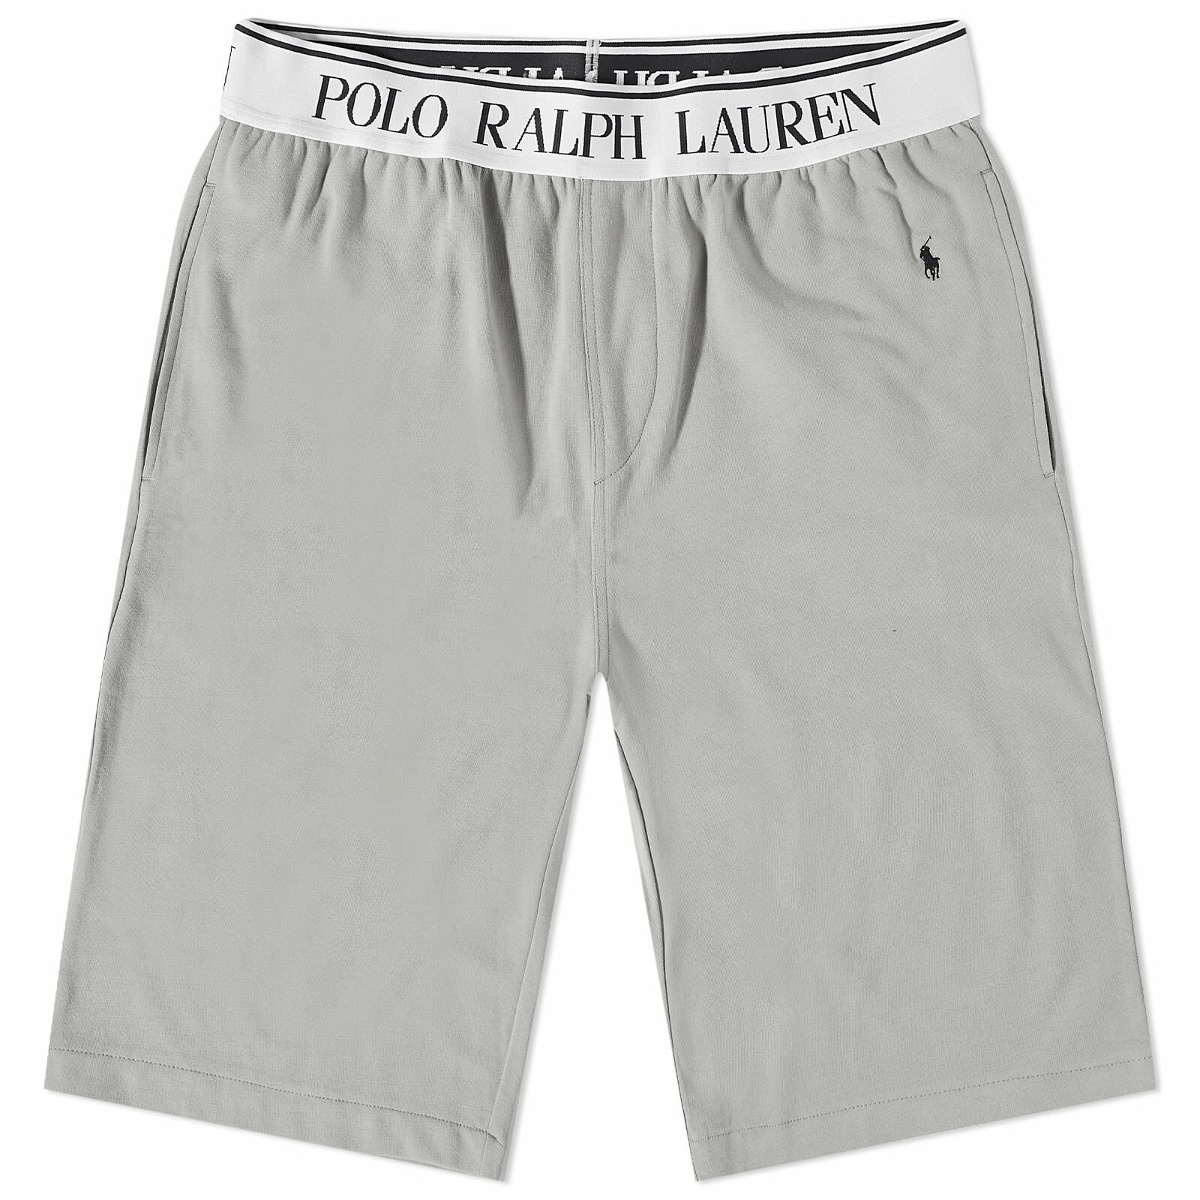 Polo Ralph Lauren Men's Sleepwear Sweat Short in Grey Fog Polo Ralph Lauren